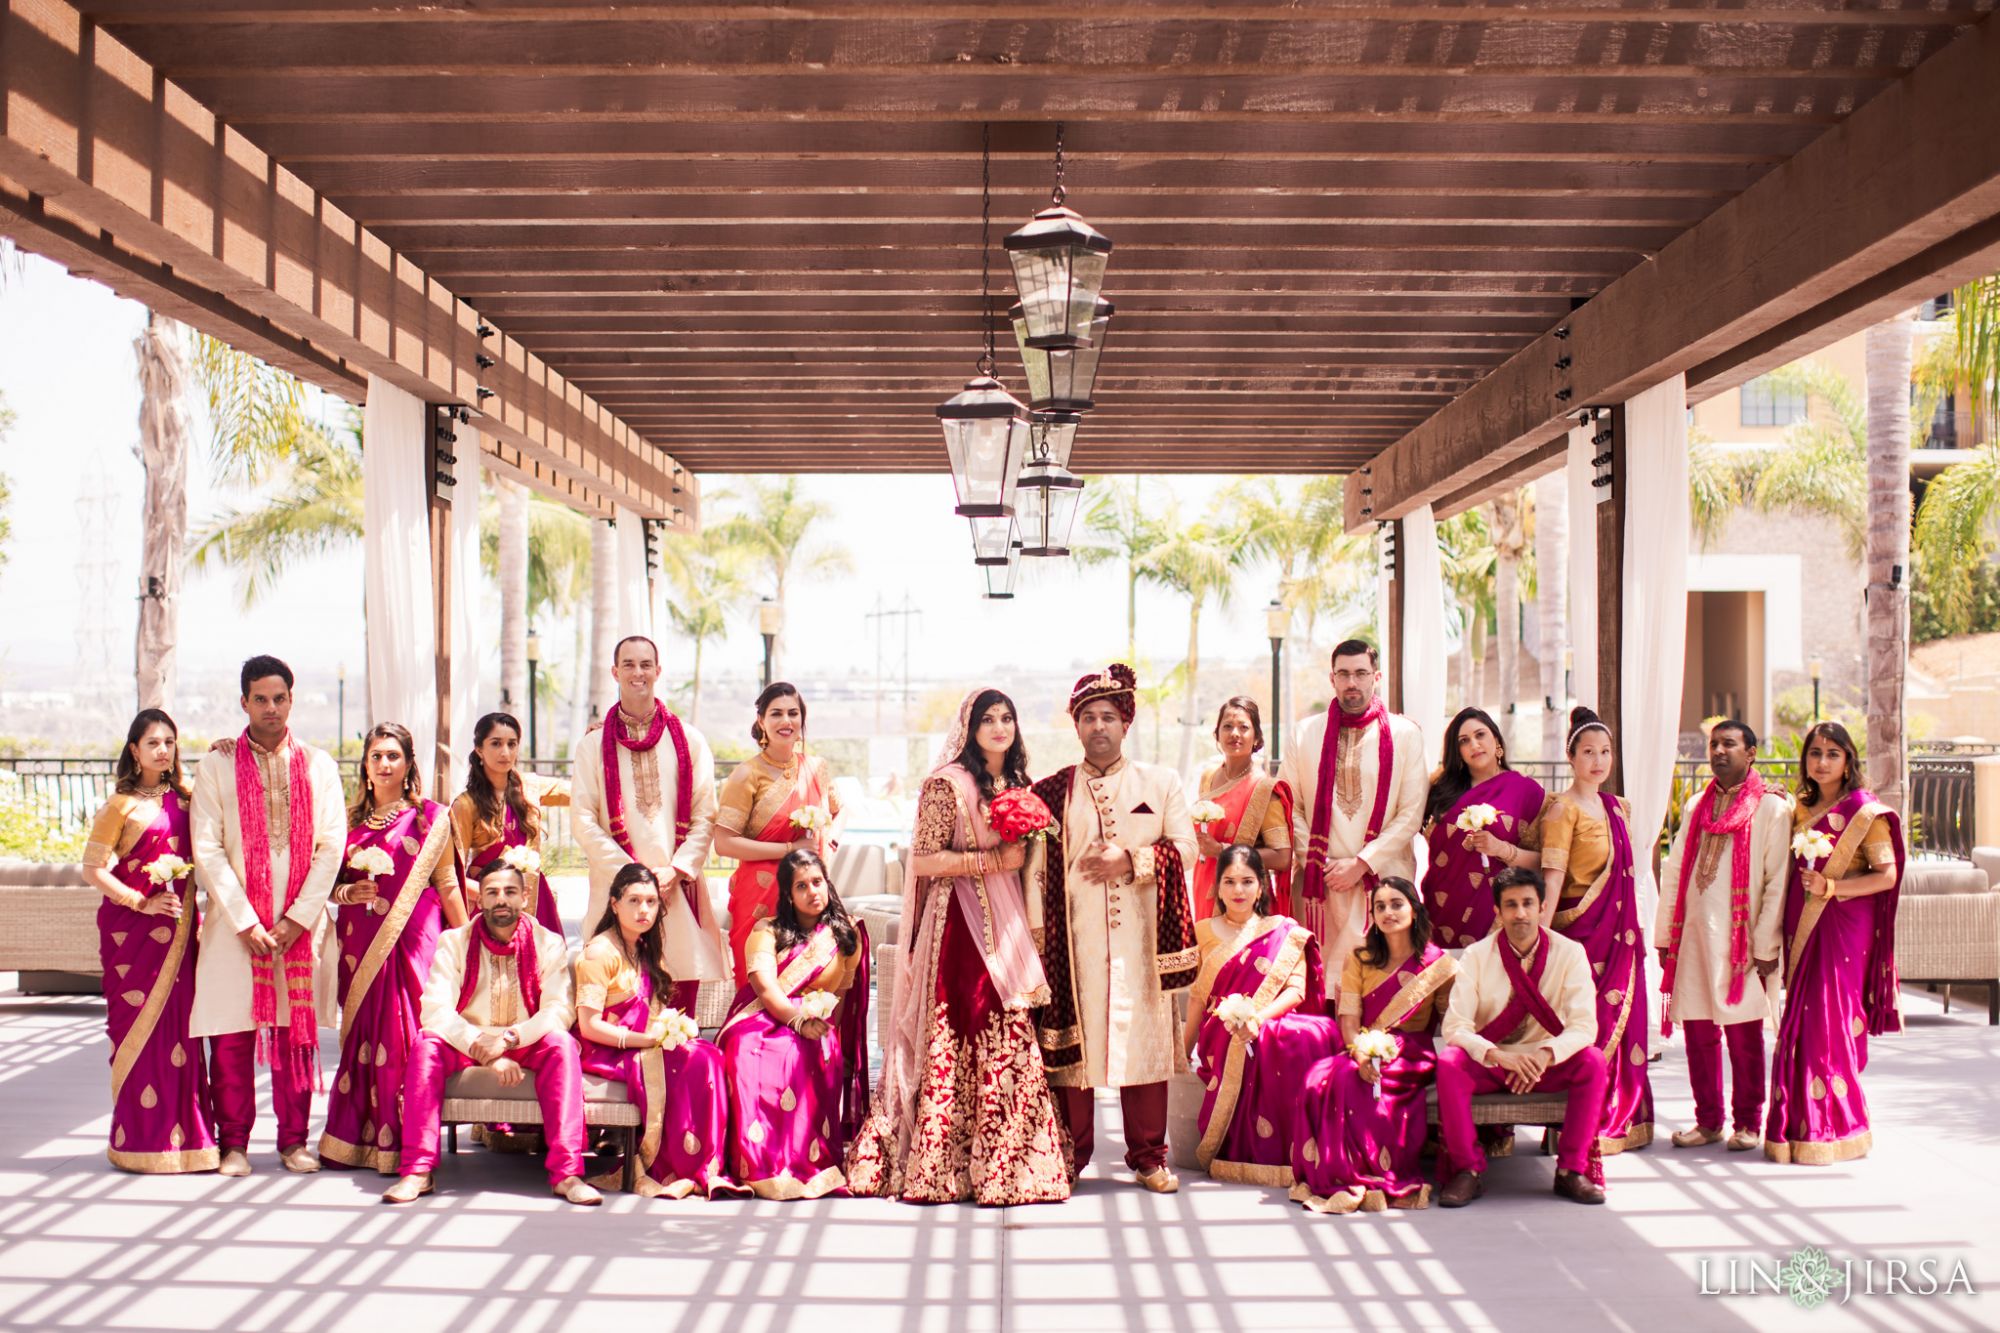 sheraton carlsbad resort indian wedding photography wedding party